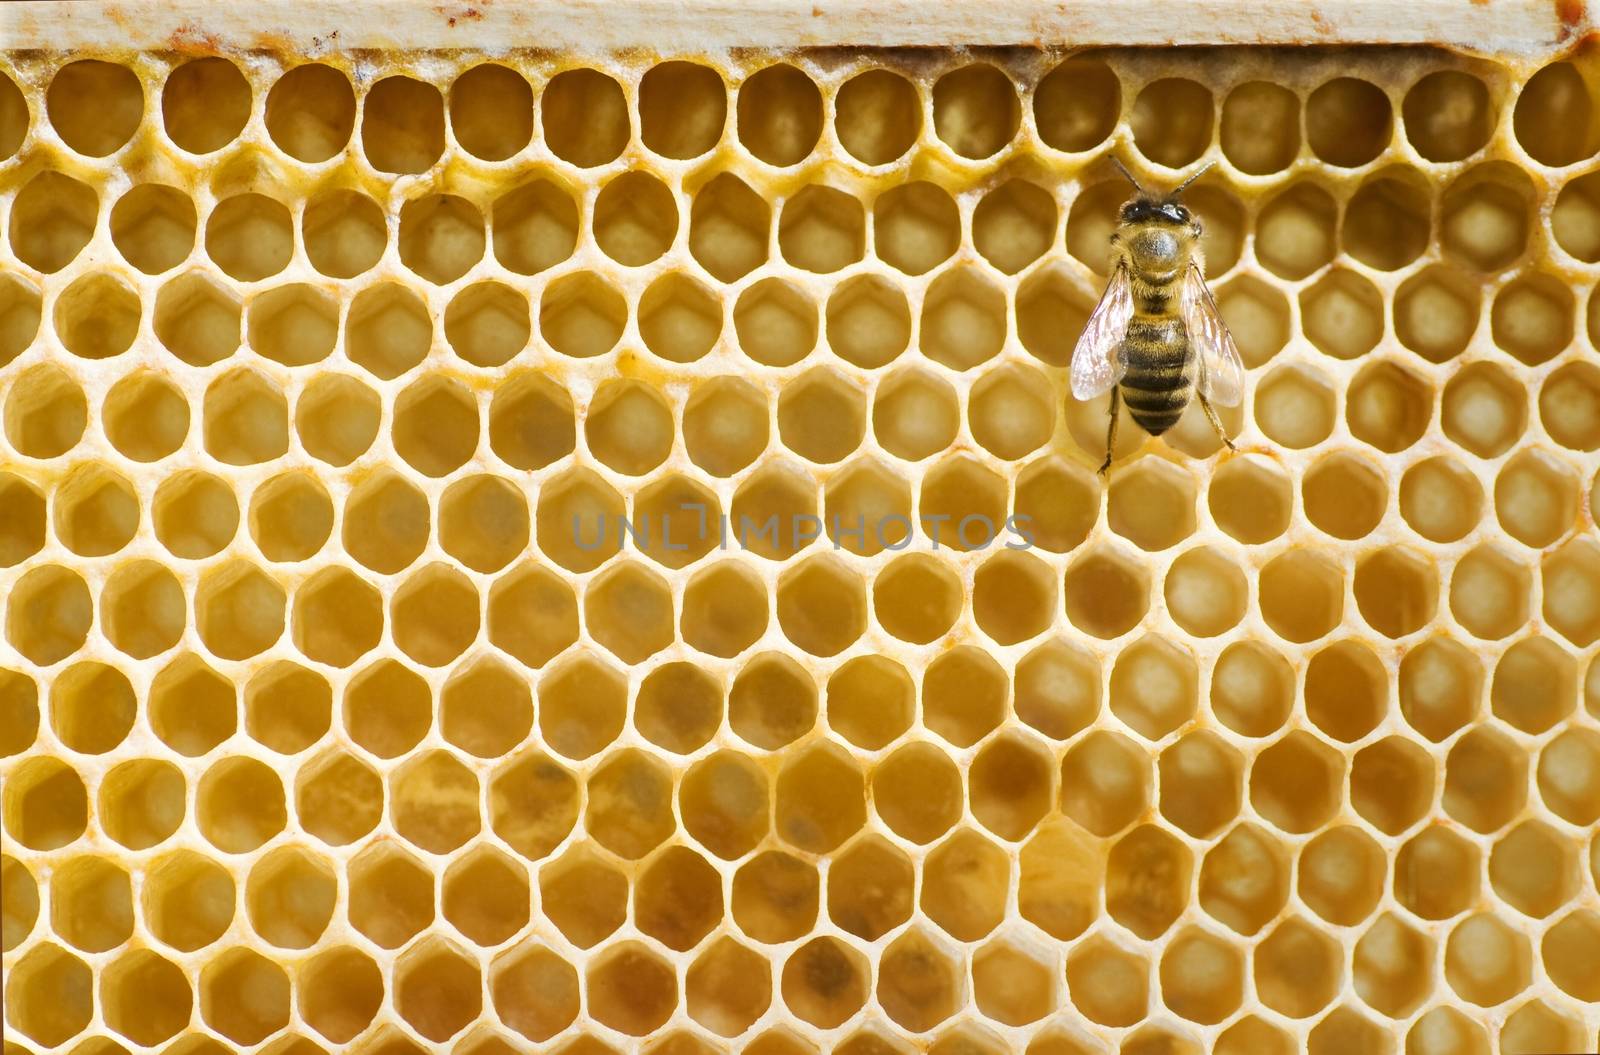 Honeybee on a comb  by Digifoodstock